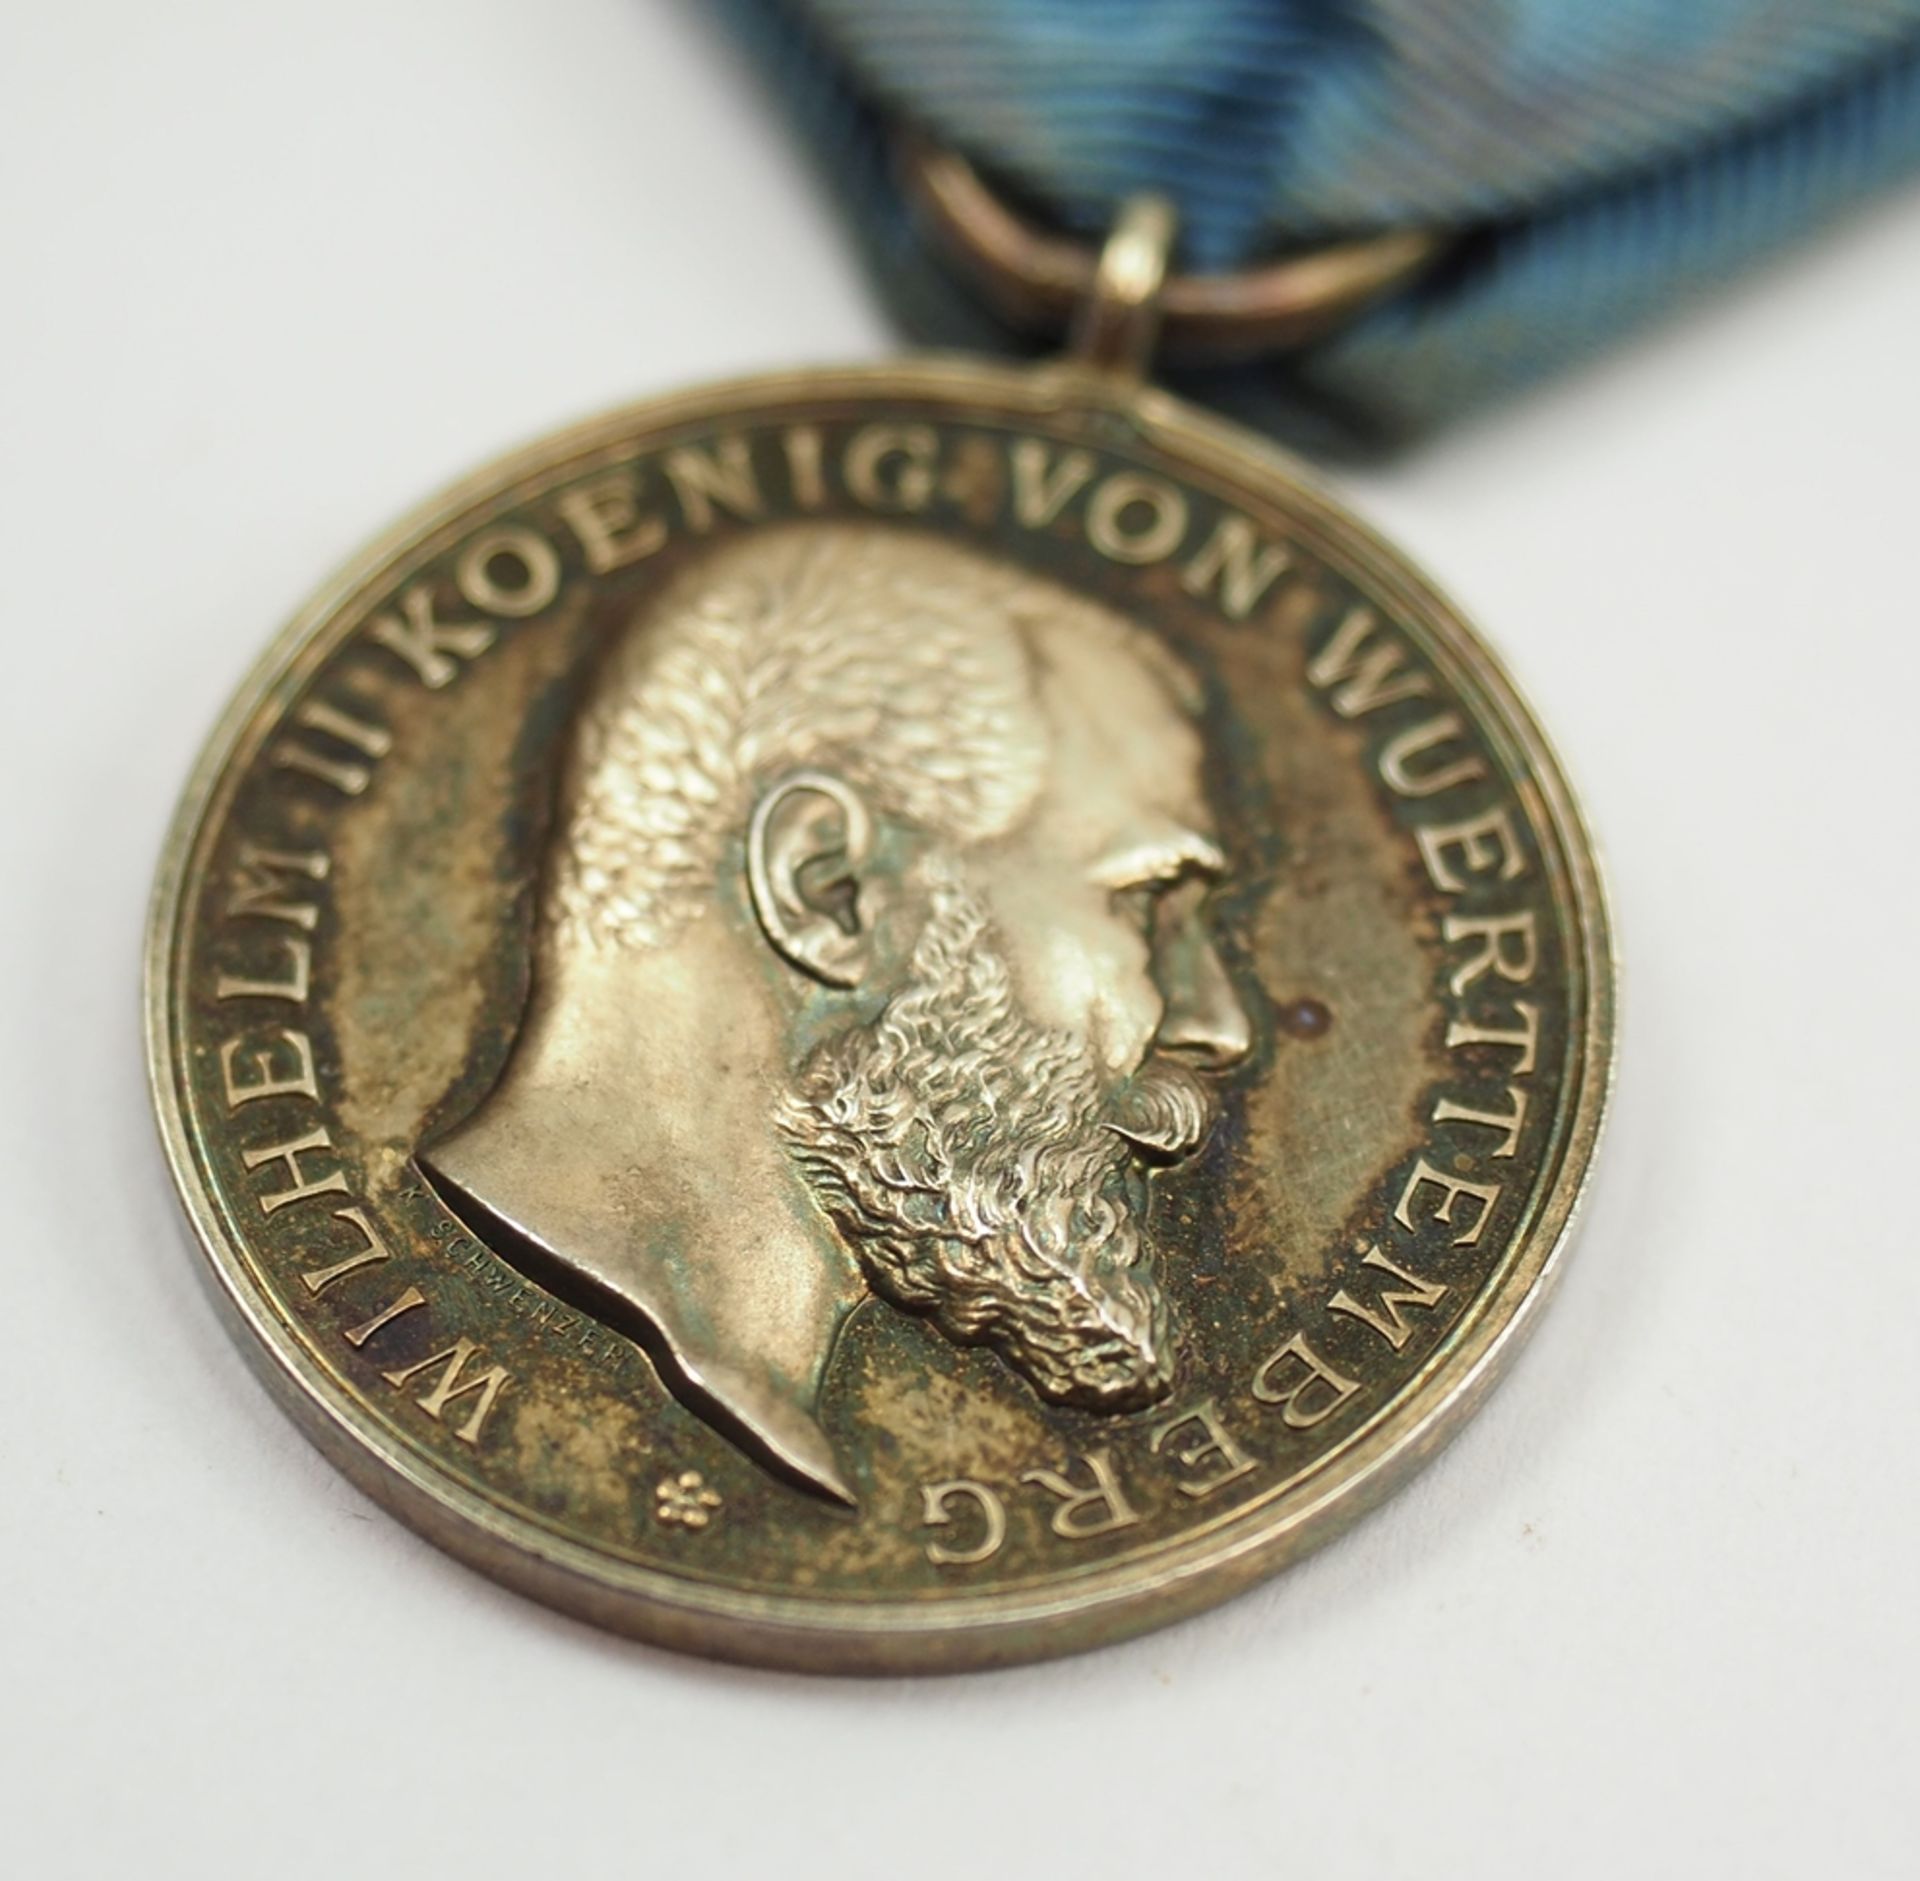 Württemberg: Friedrichsorden Medaille. - Image 2 of 3